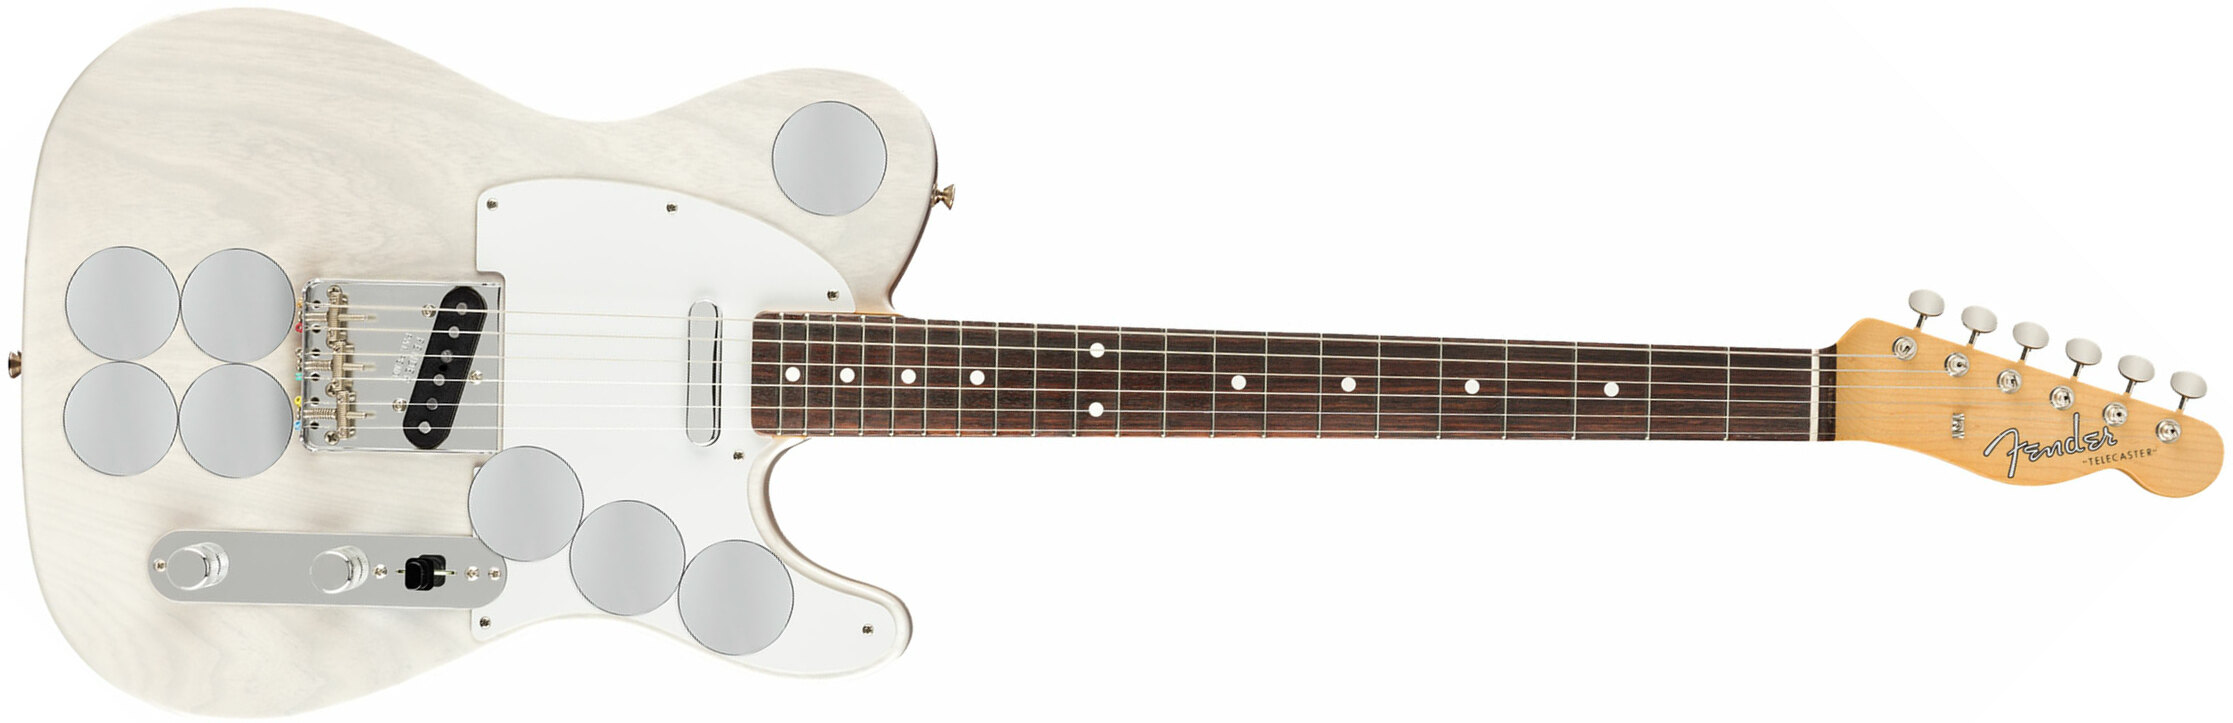 Fender Telecaster Mirror Jimmy Page Us Rw - White Blonde - Guitare Électrique Forme Tel - Main picture